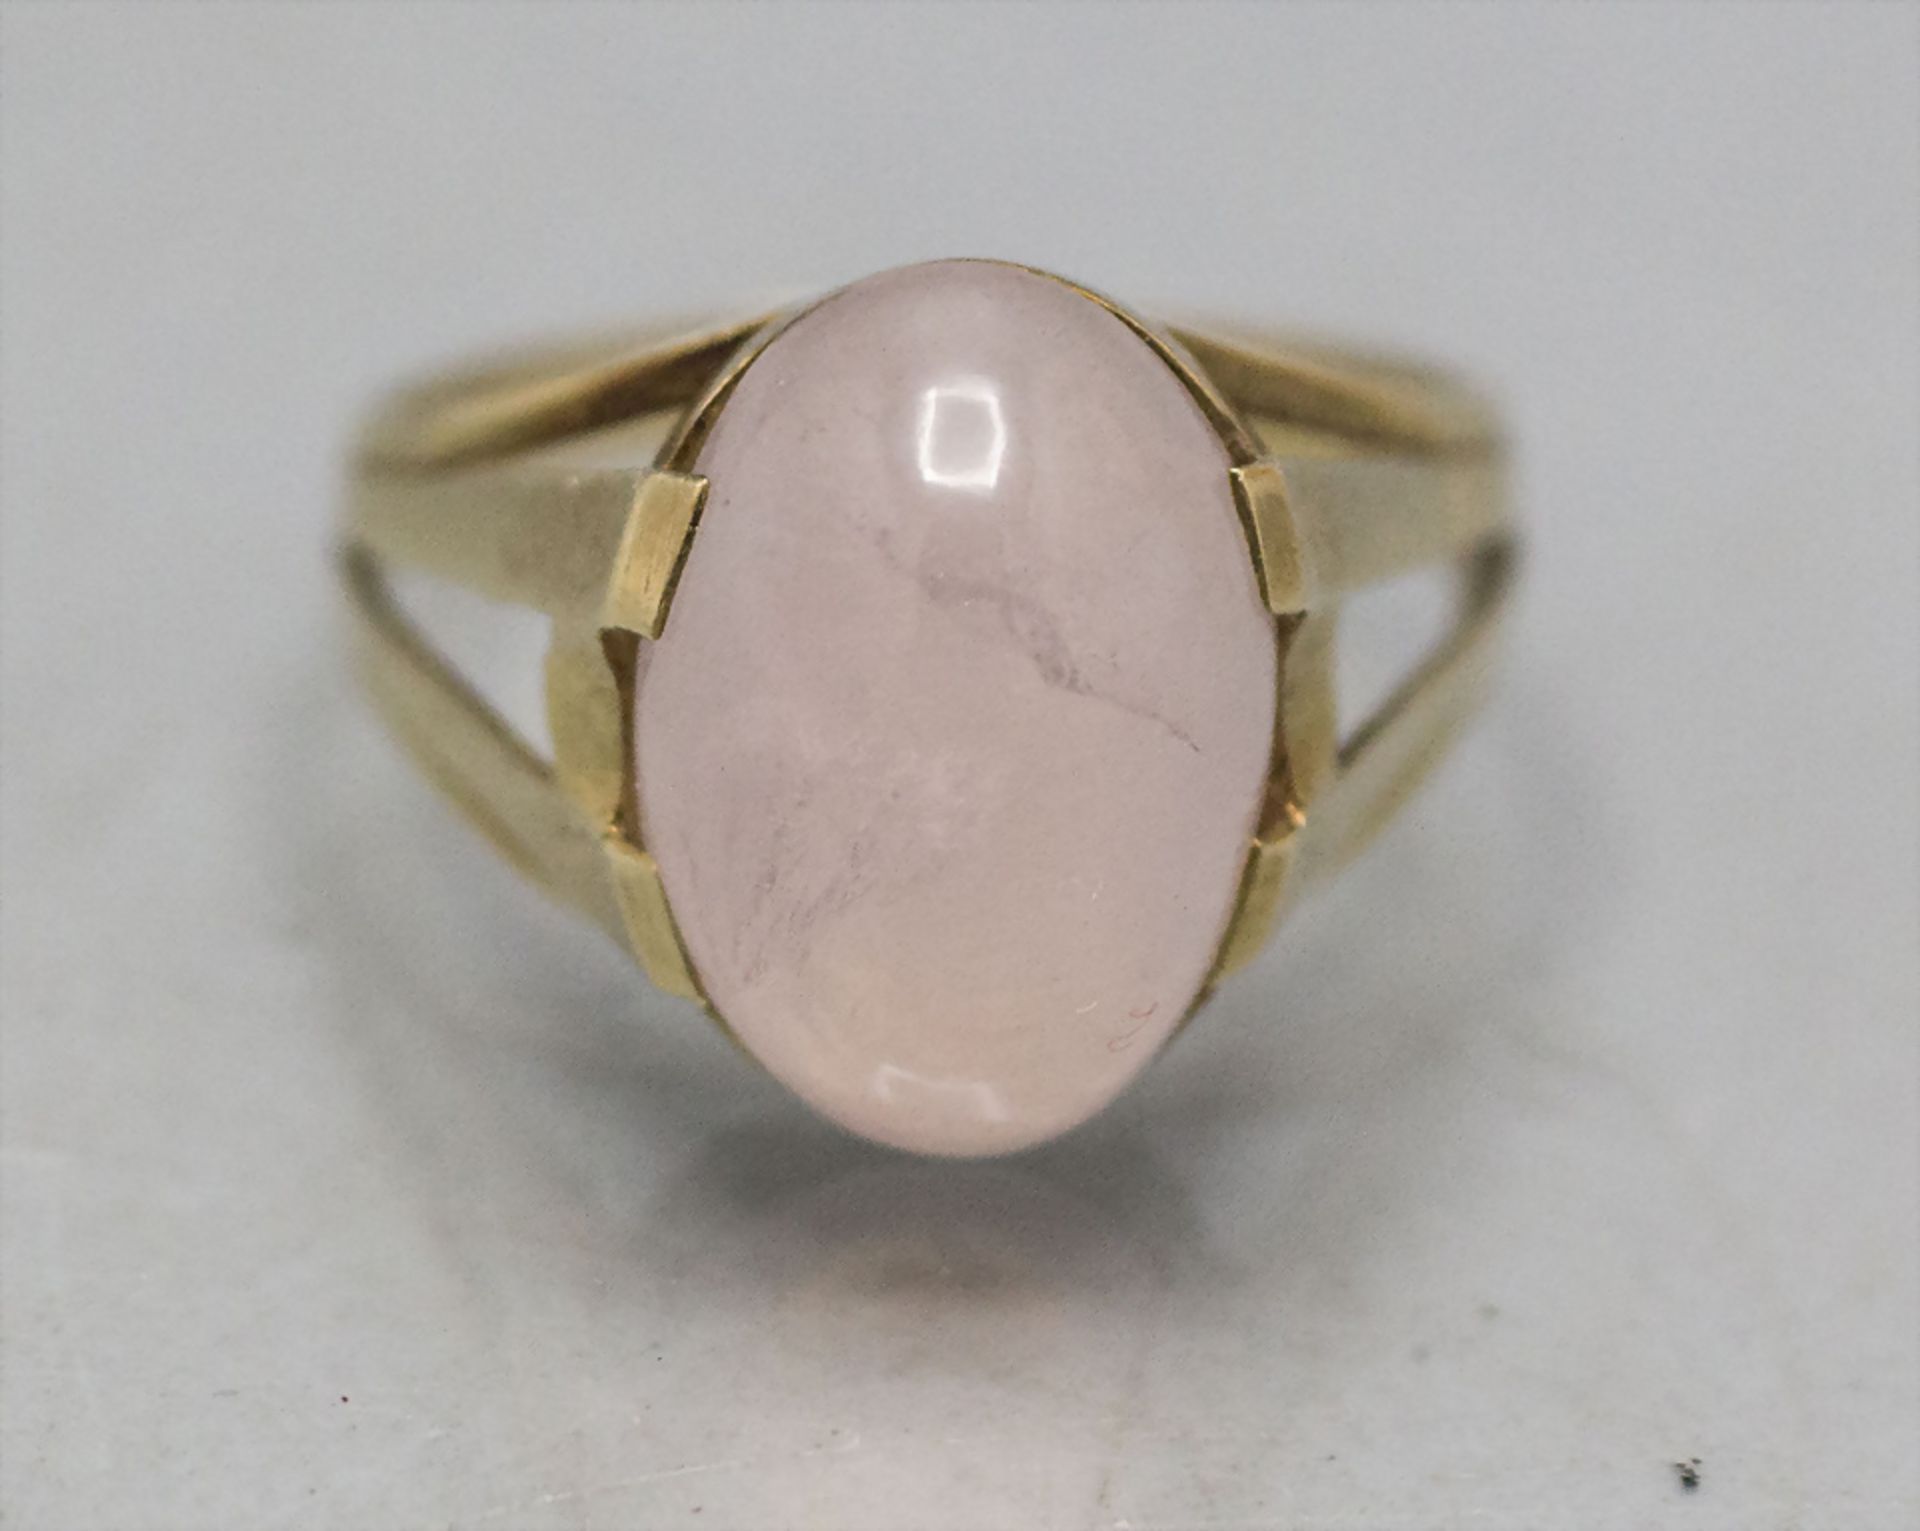 Damenring mit Rosenquarz / A ladies 14 ct gold ring with rose quartz - Image 3 of 3